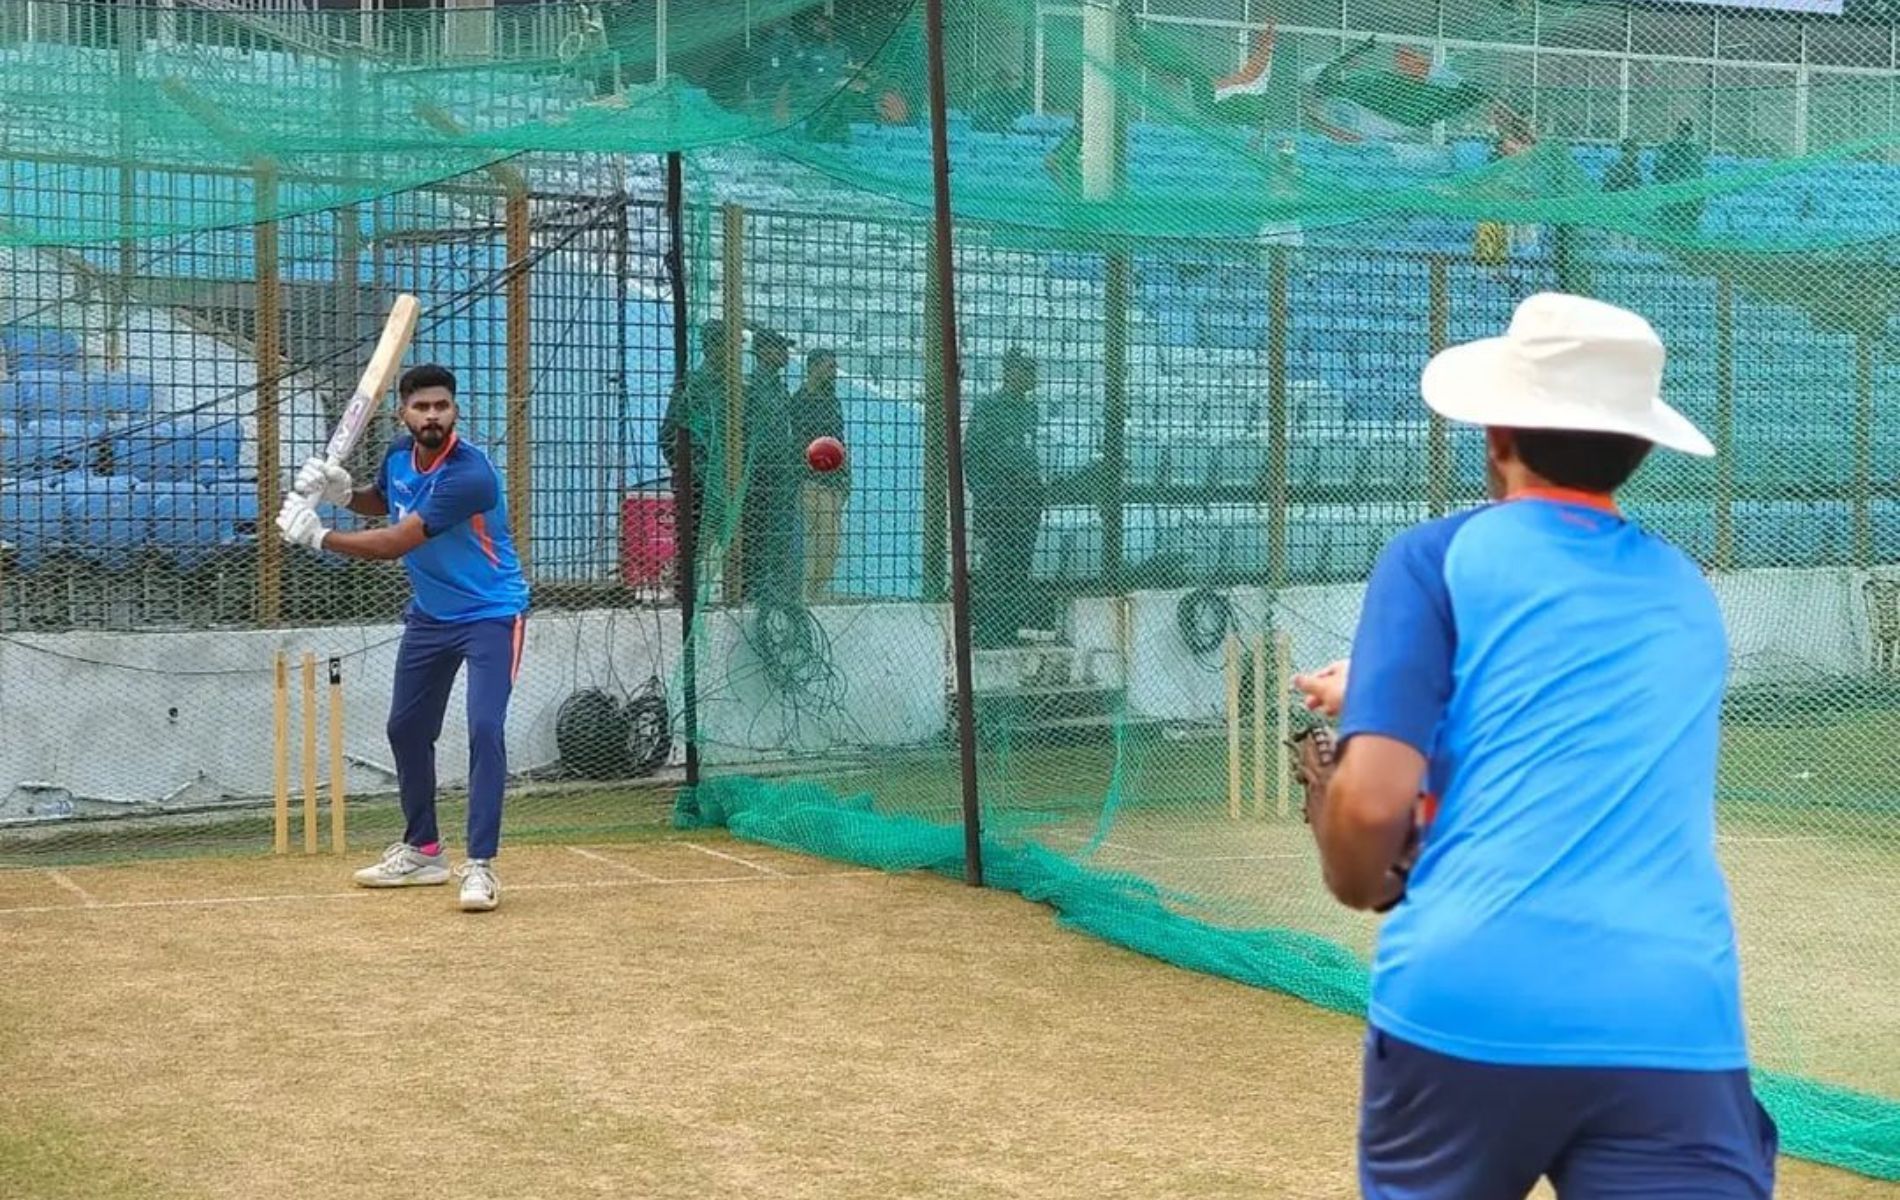 Shreyas Iyer batting in the nets. (Pic: BCCI/Twitter)